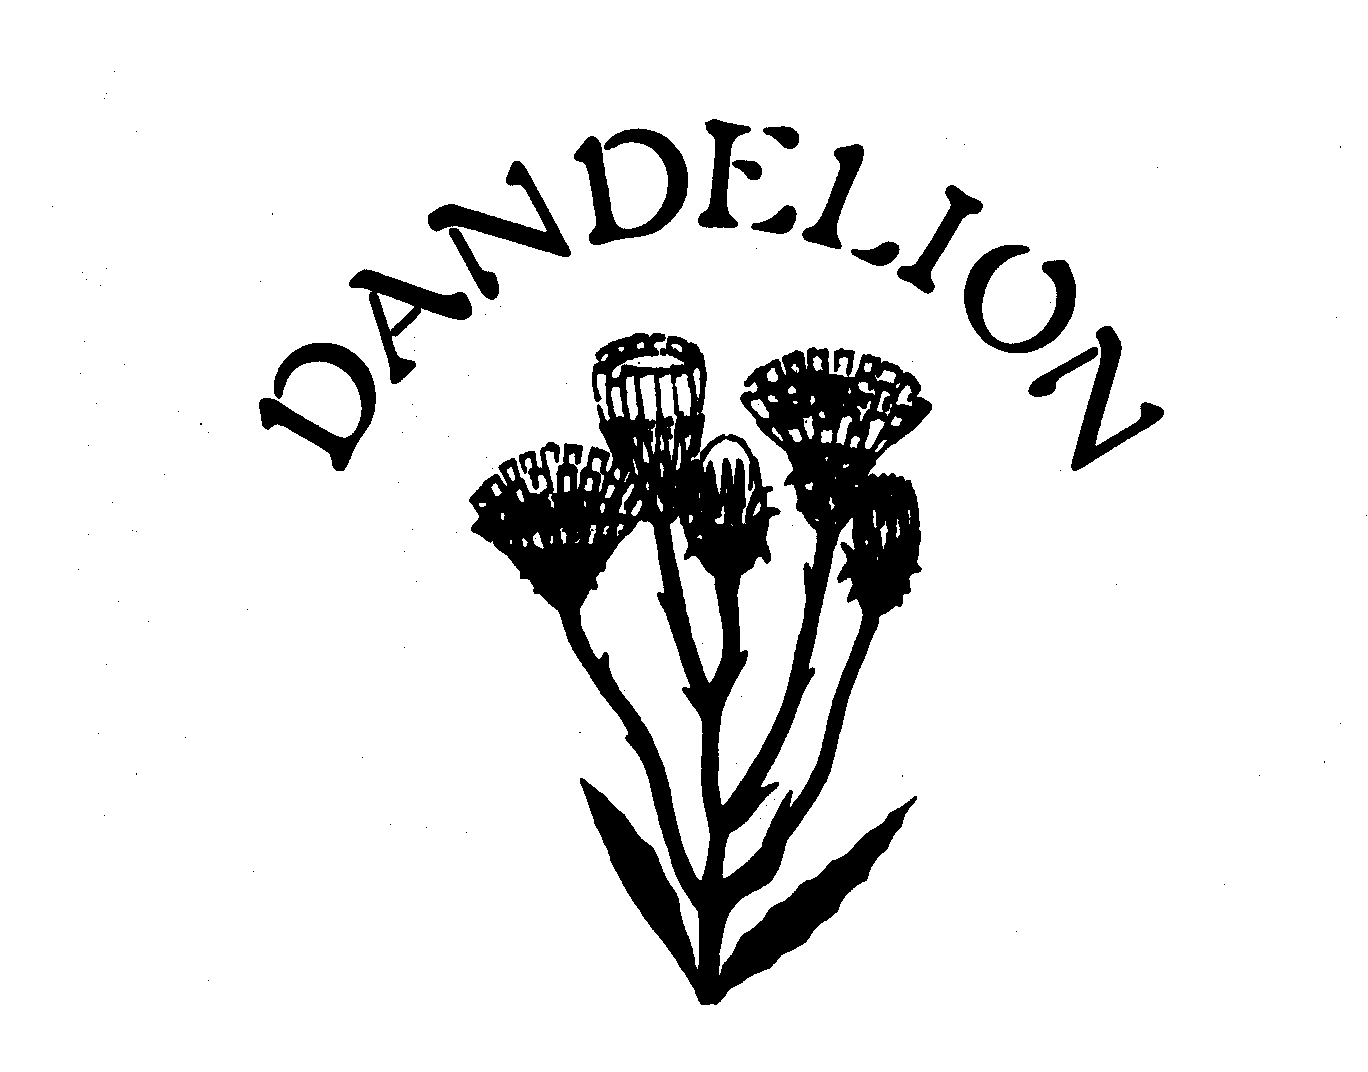 DANDELION